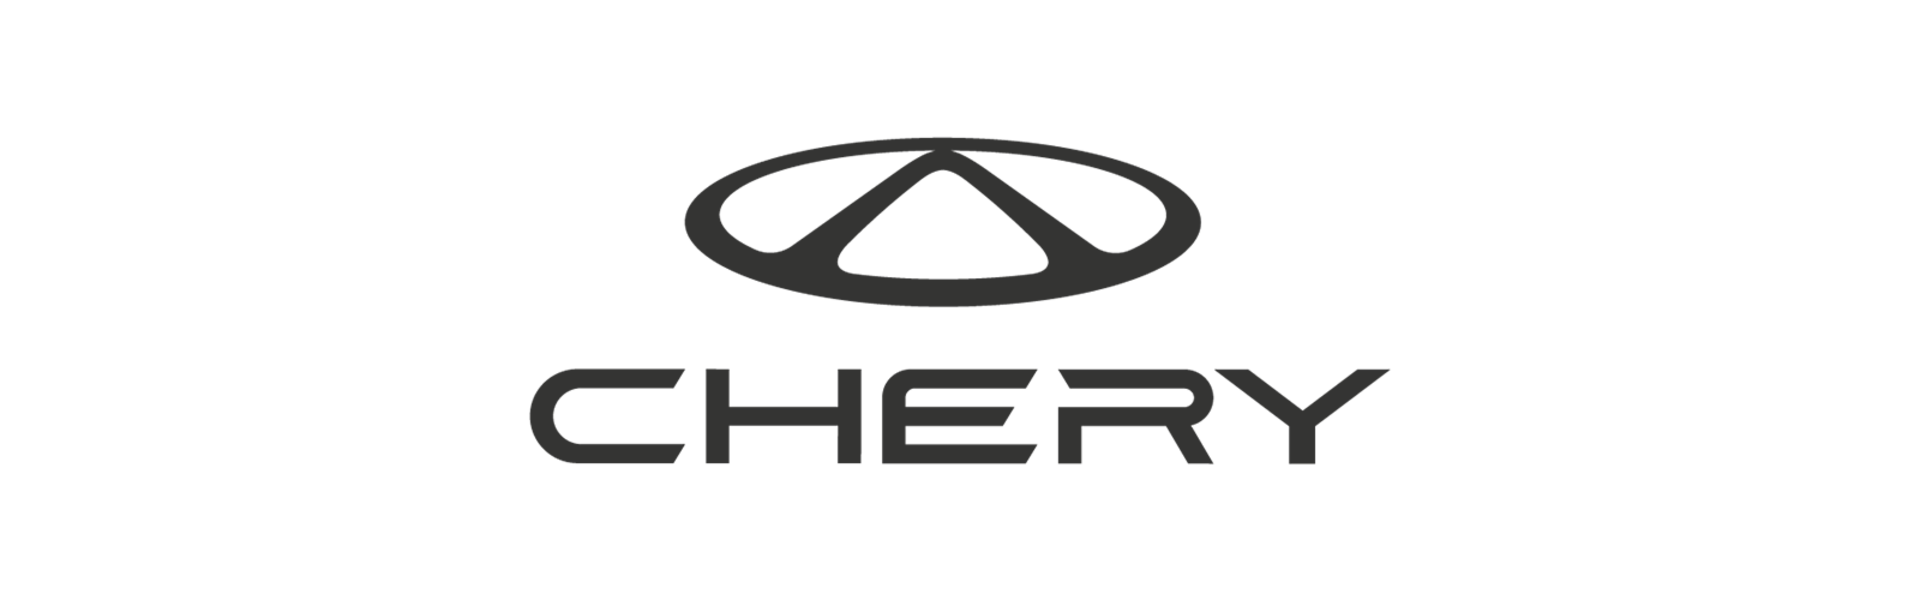 Чери машина логотип. Chery логотип. Чери Тигго лого. Cherry автомобиль логотип. Китайские автомобили Chery.